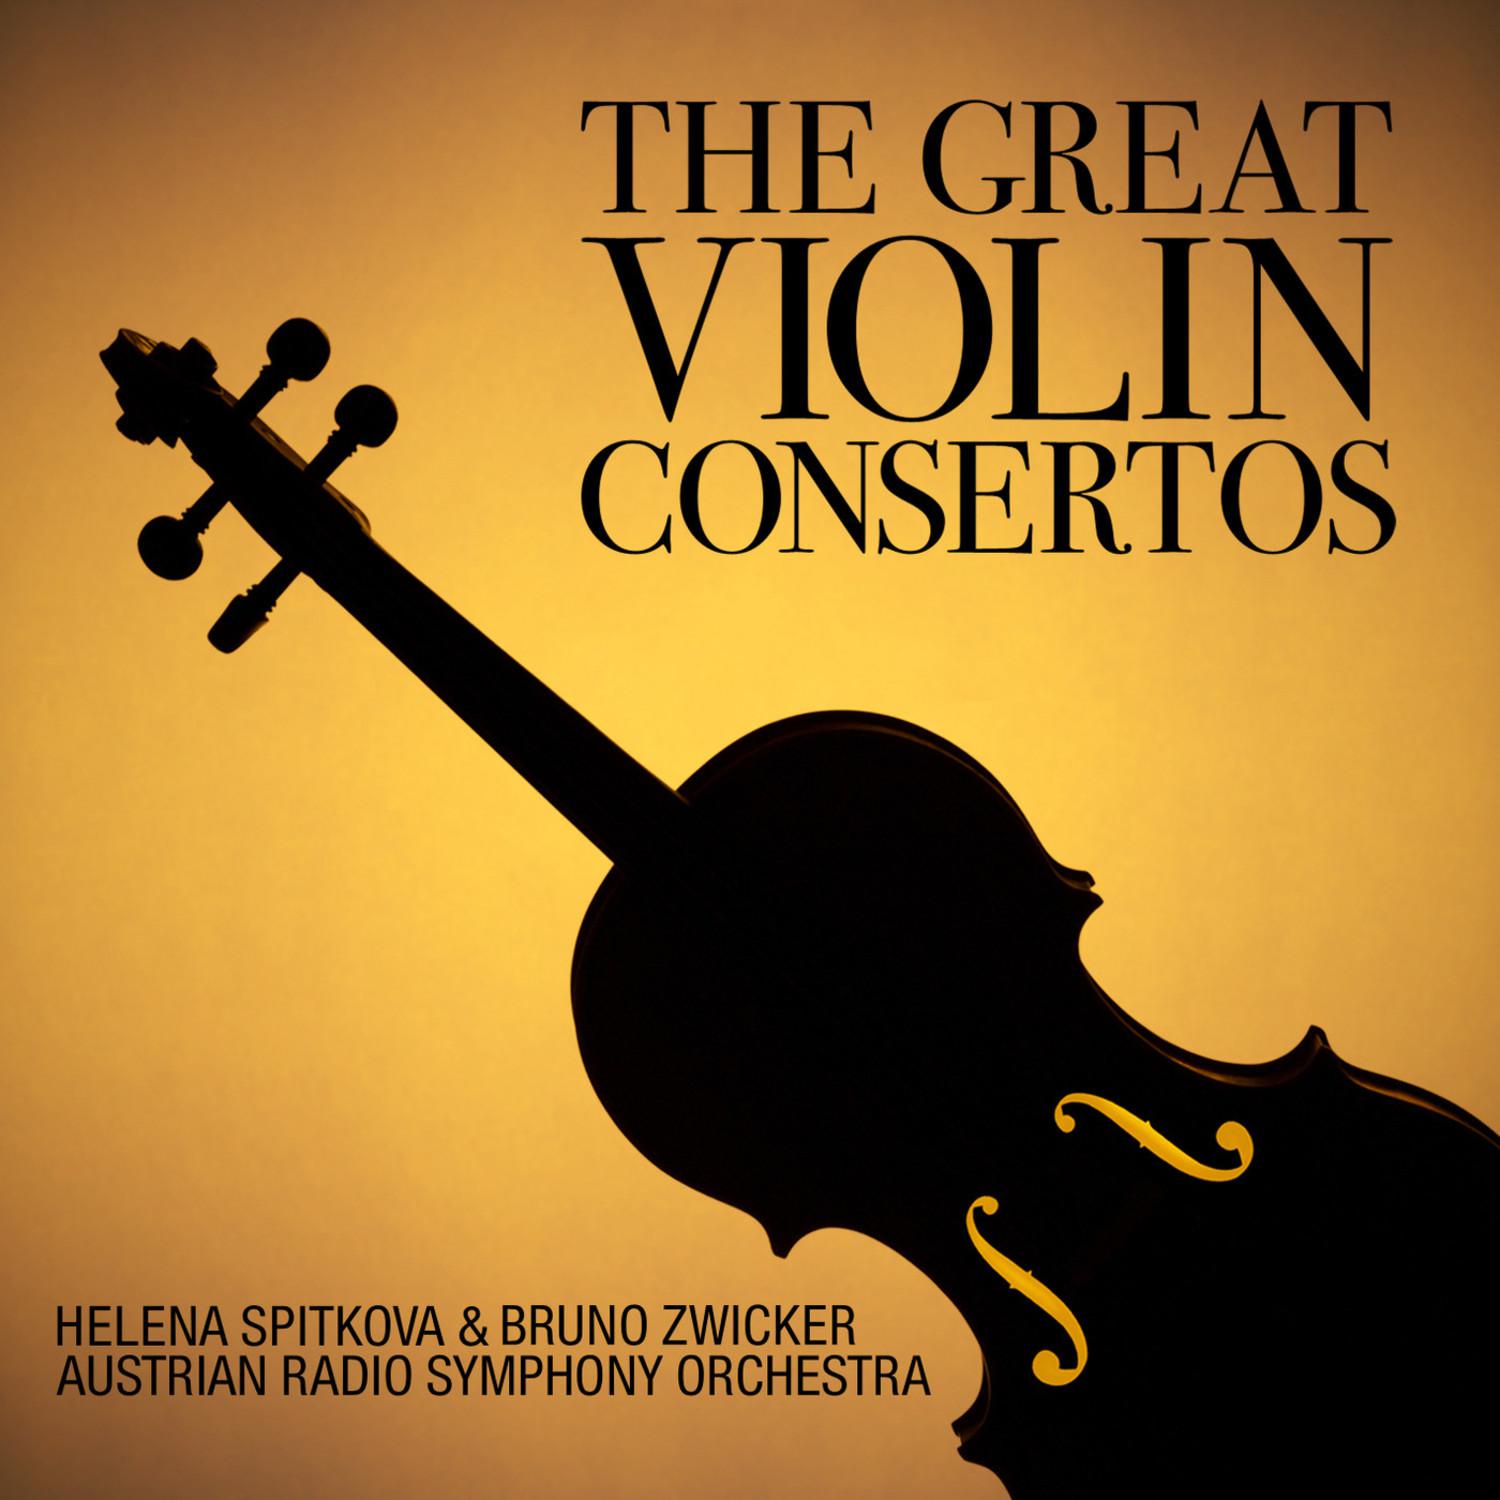 Concerto No. 2 in G Minor for Violin and Orchestra, Op. 63: III. Allegro marcato